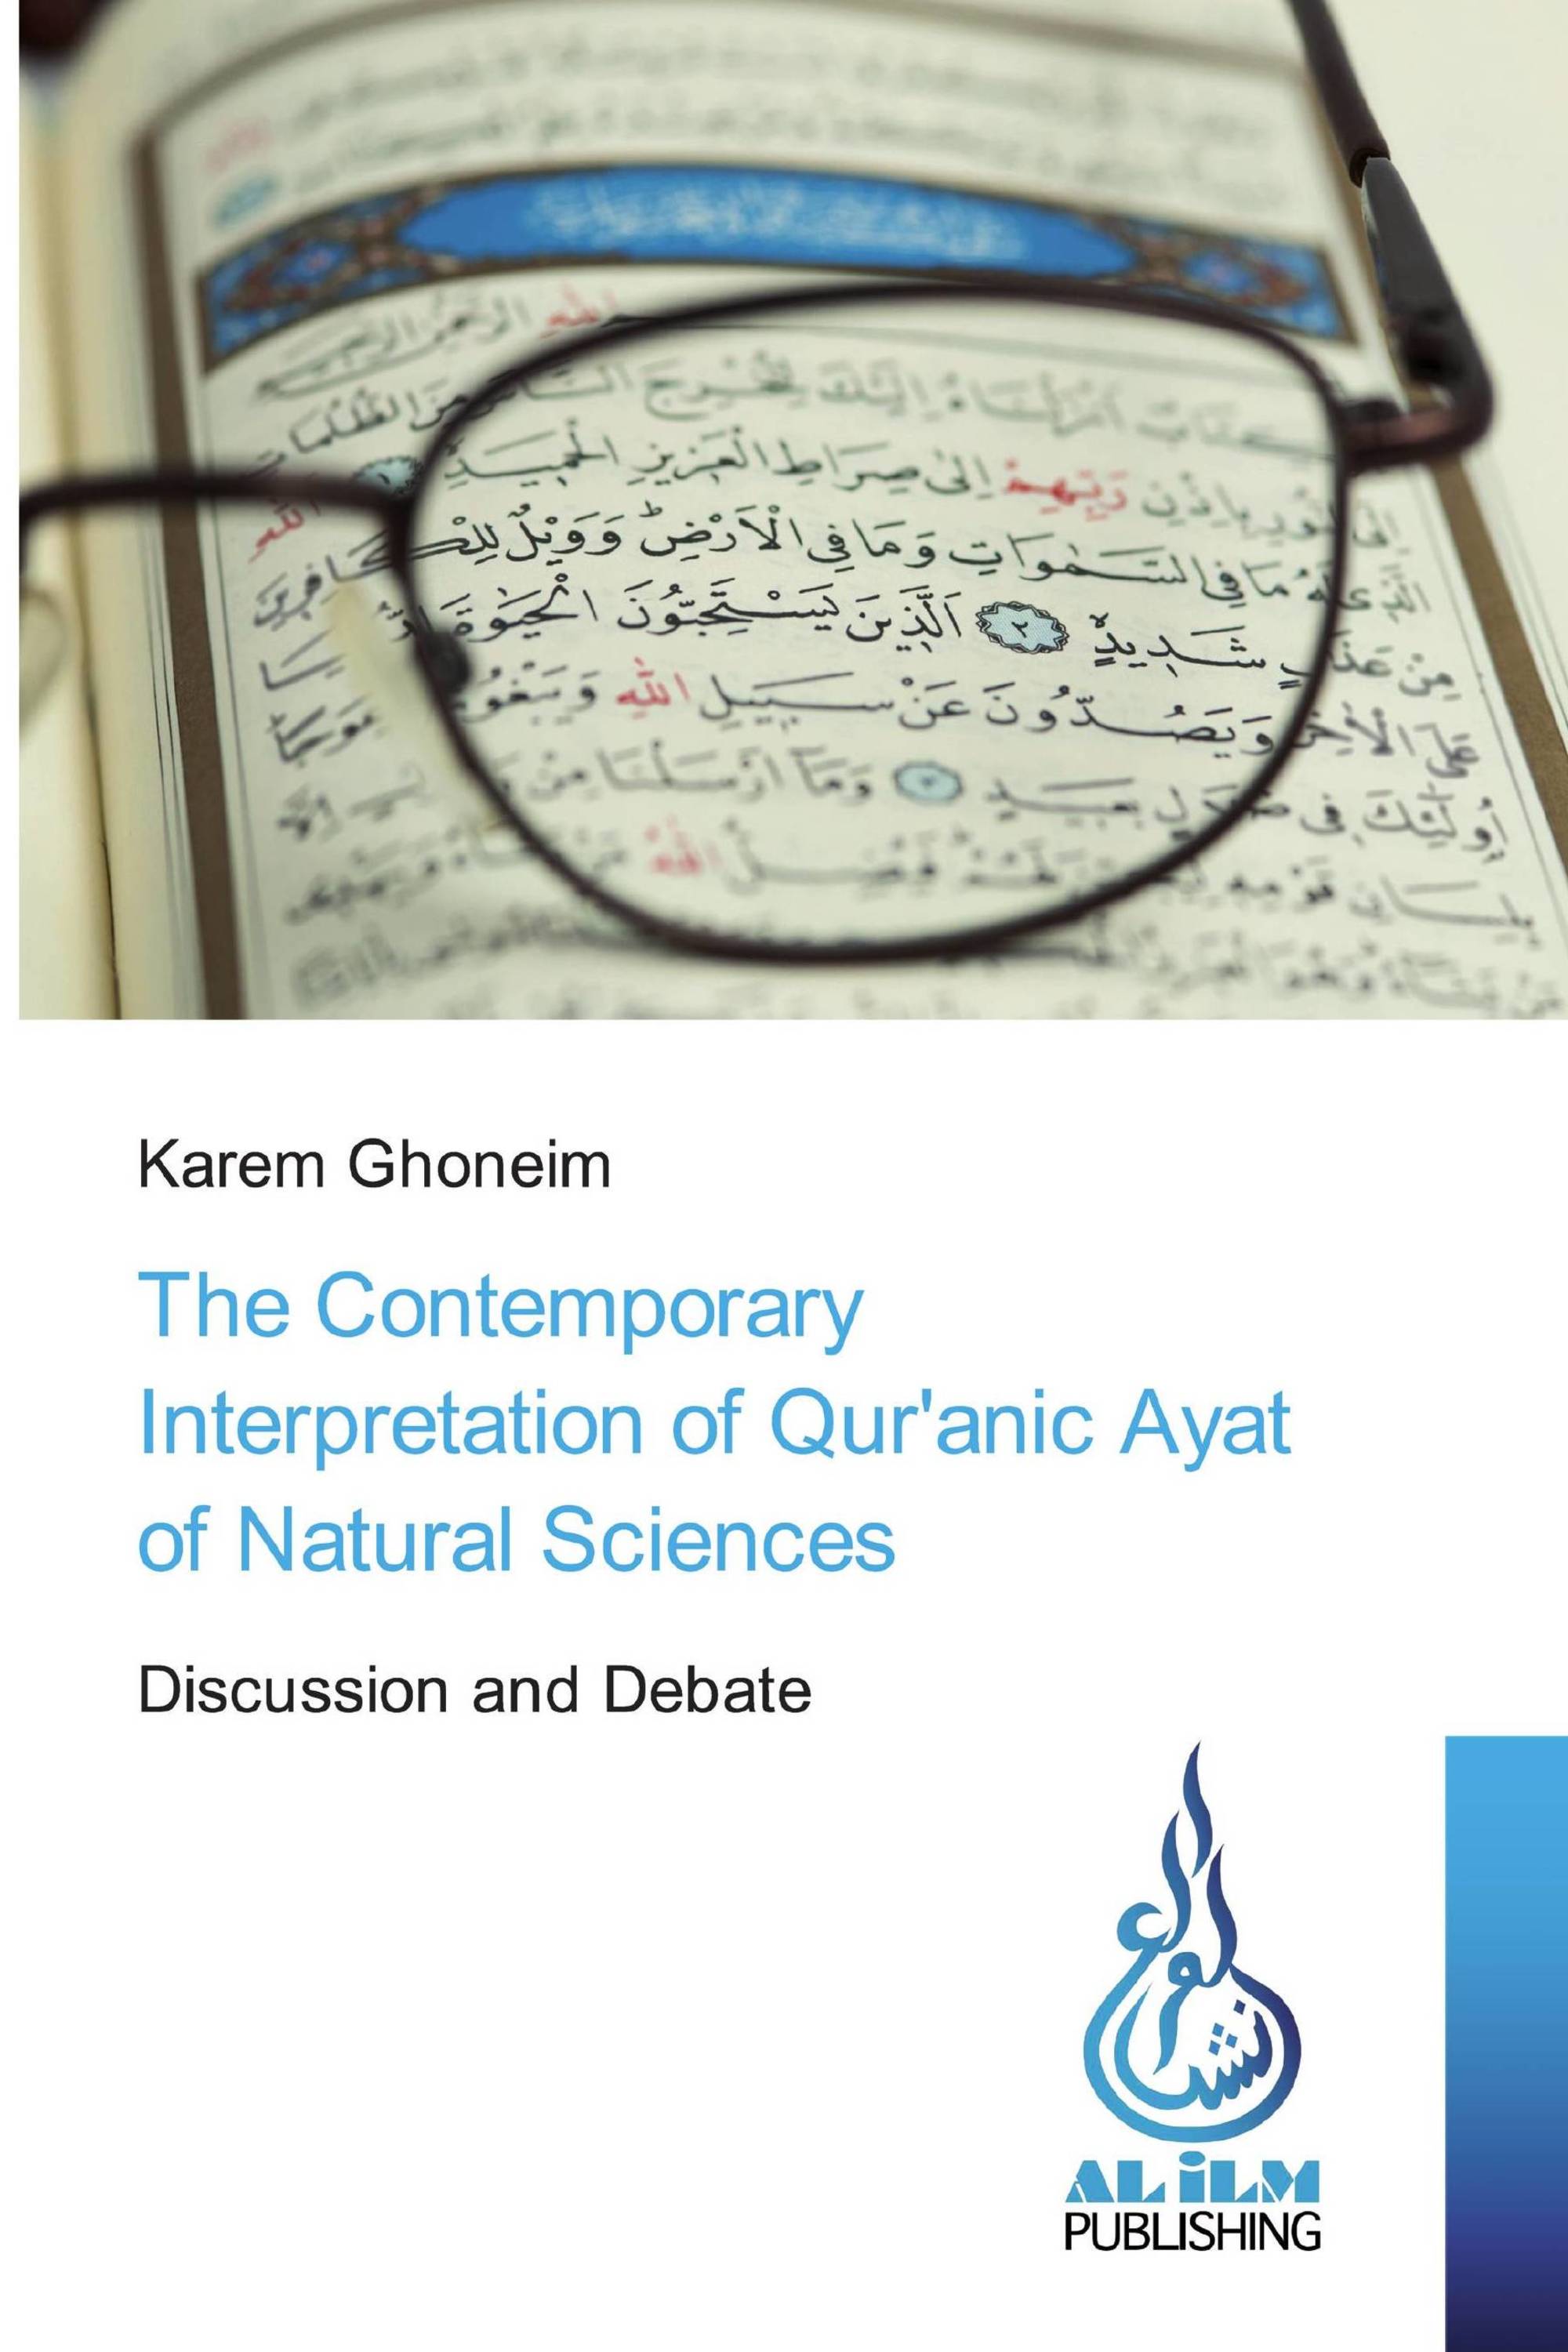 The Contemporary Interpretation of Qur'anic Ayat of Natural Sciences